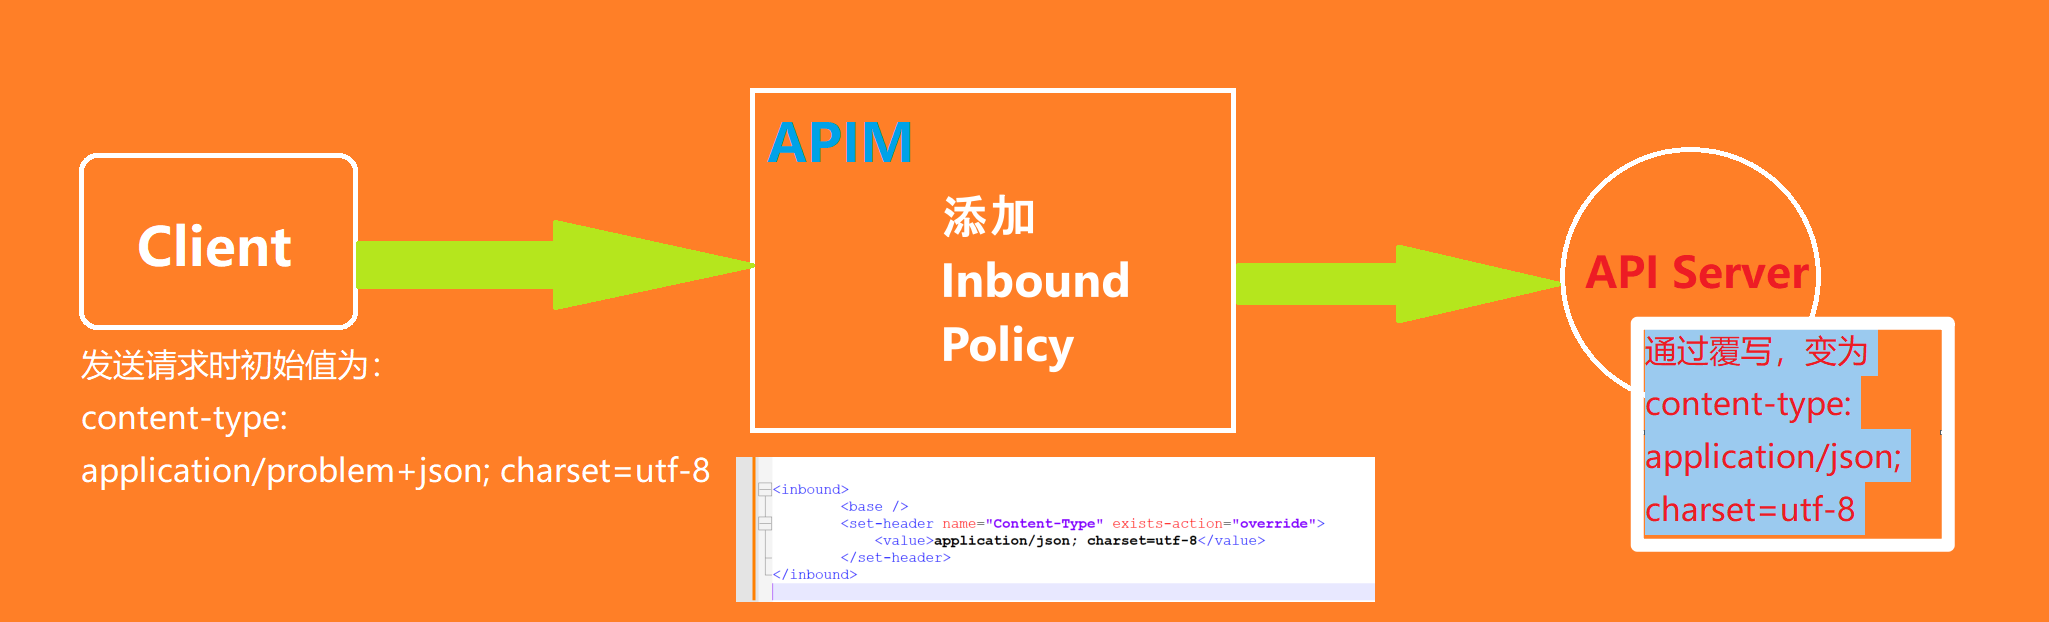 【API Management】使用 APIM Inbound Policy 来修改Content-Type Header的值_覆写